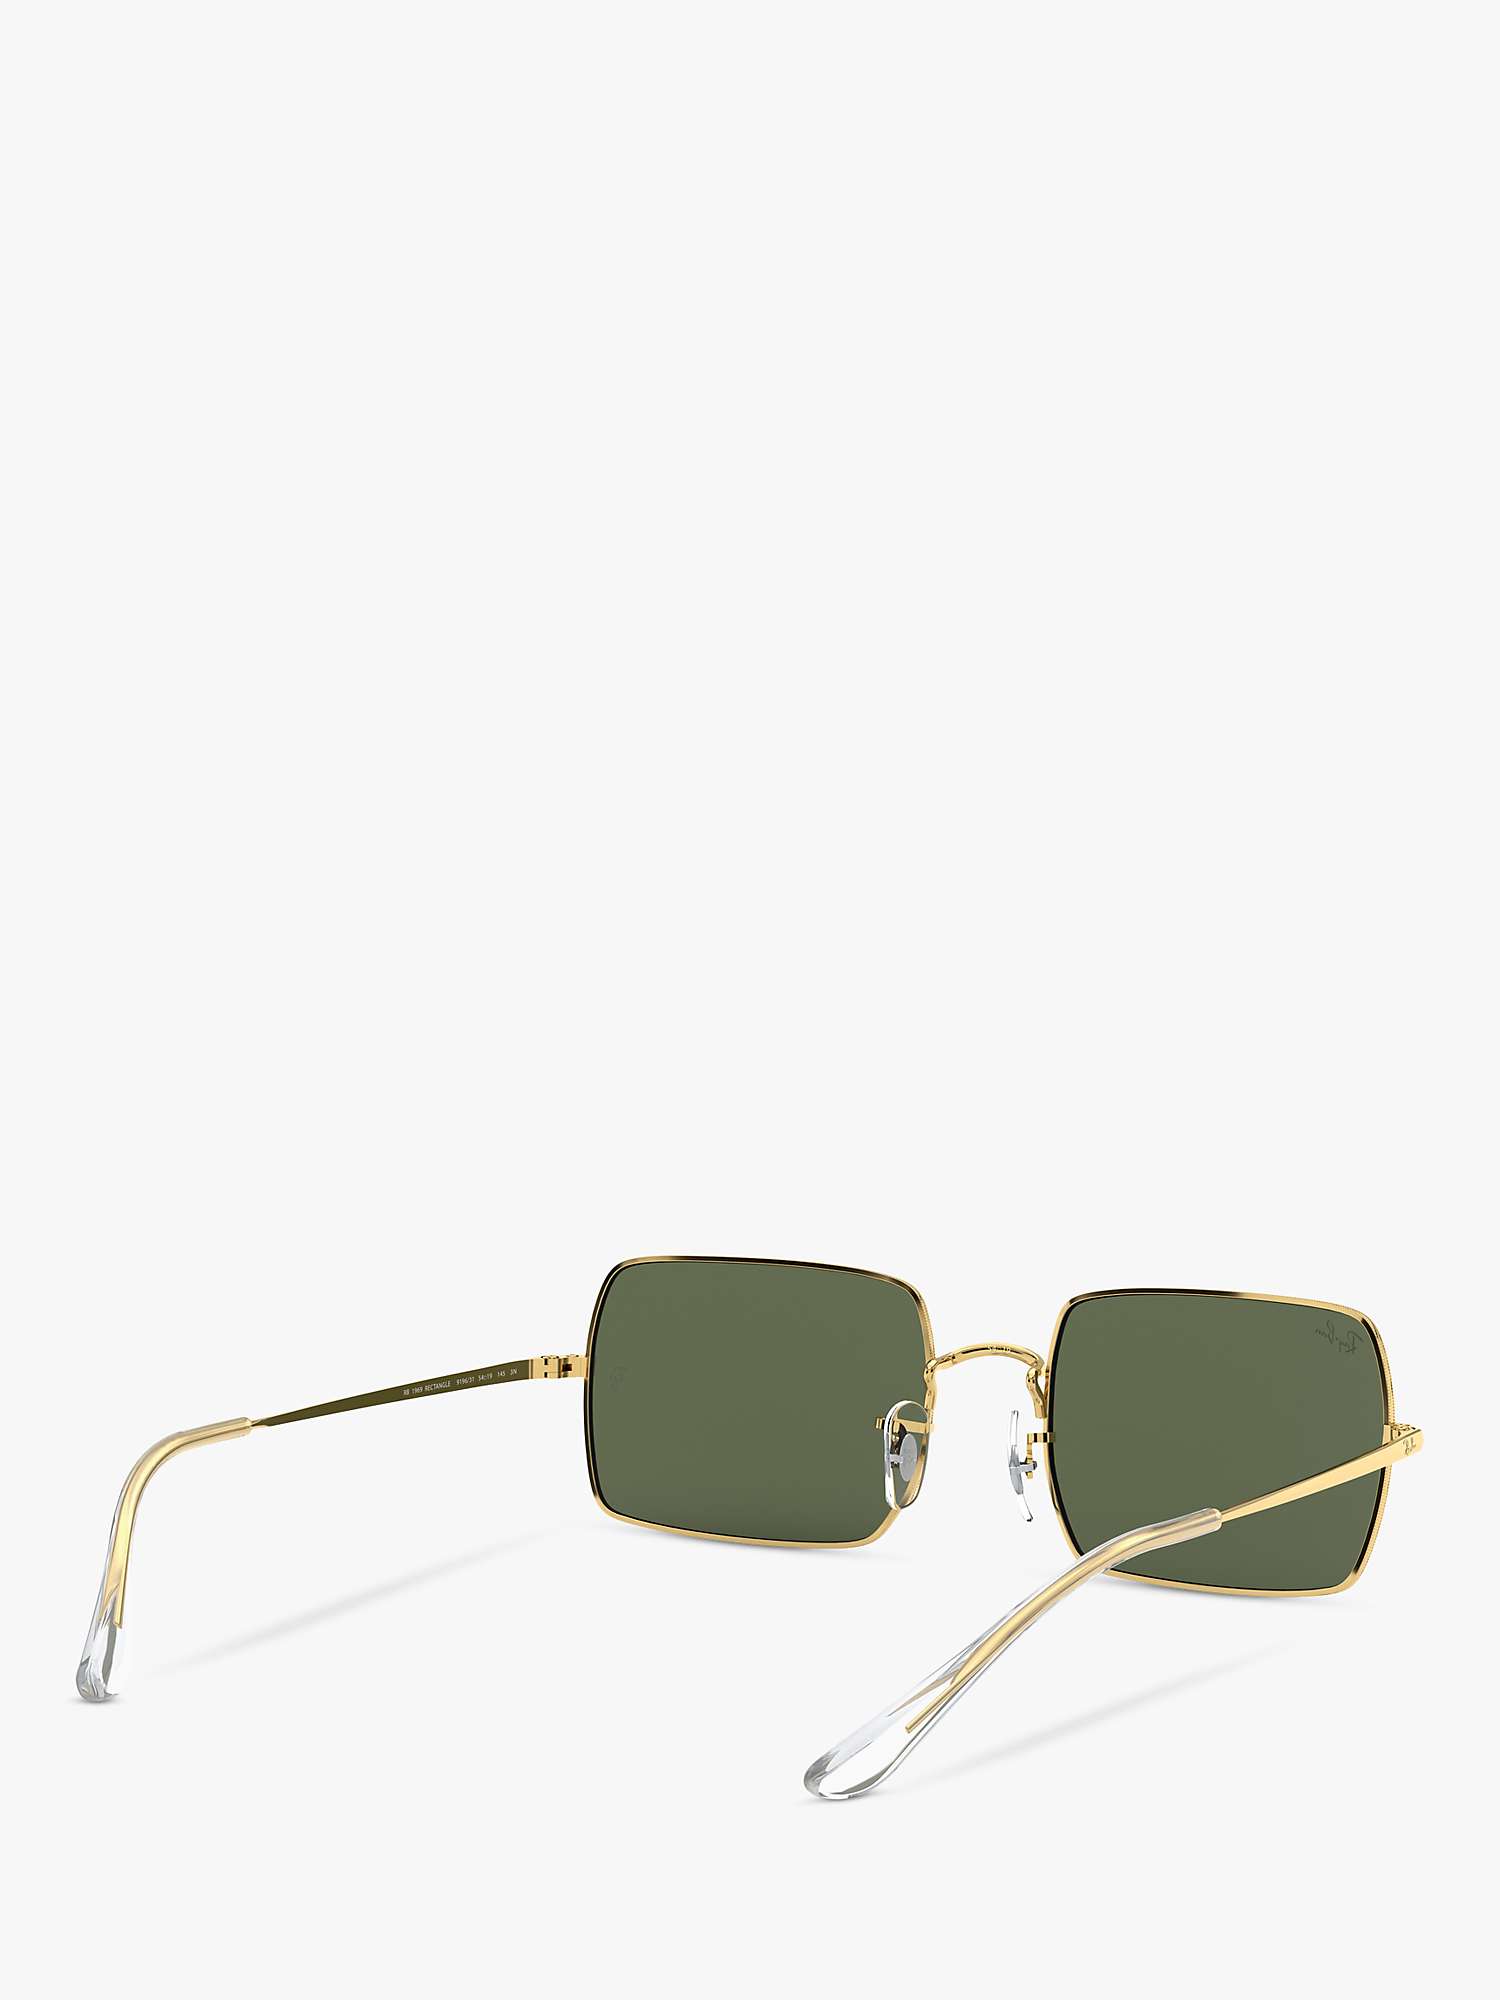 Buy Ray-Ban RB1969 Unisex Rectangular Sunglasses, Legend Gold/Green Online at johnlewis.com